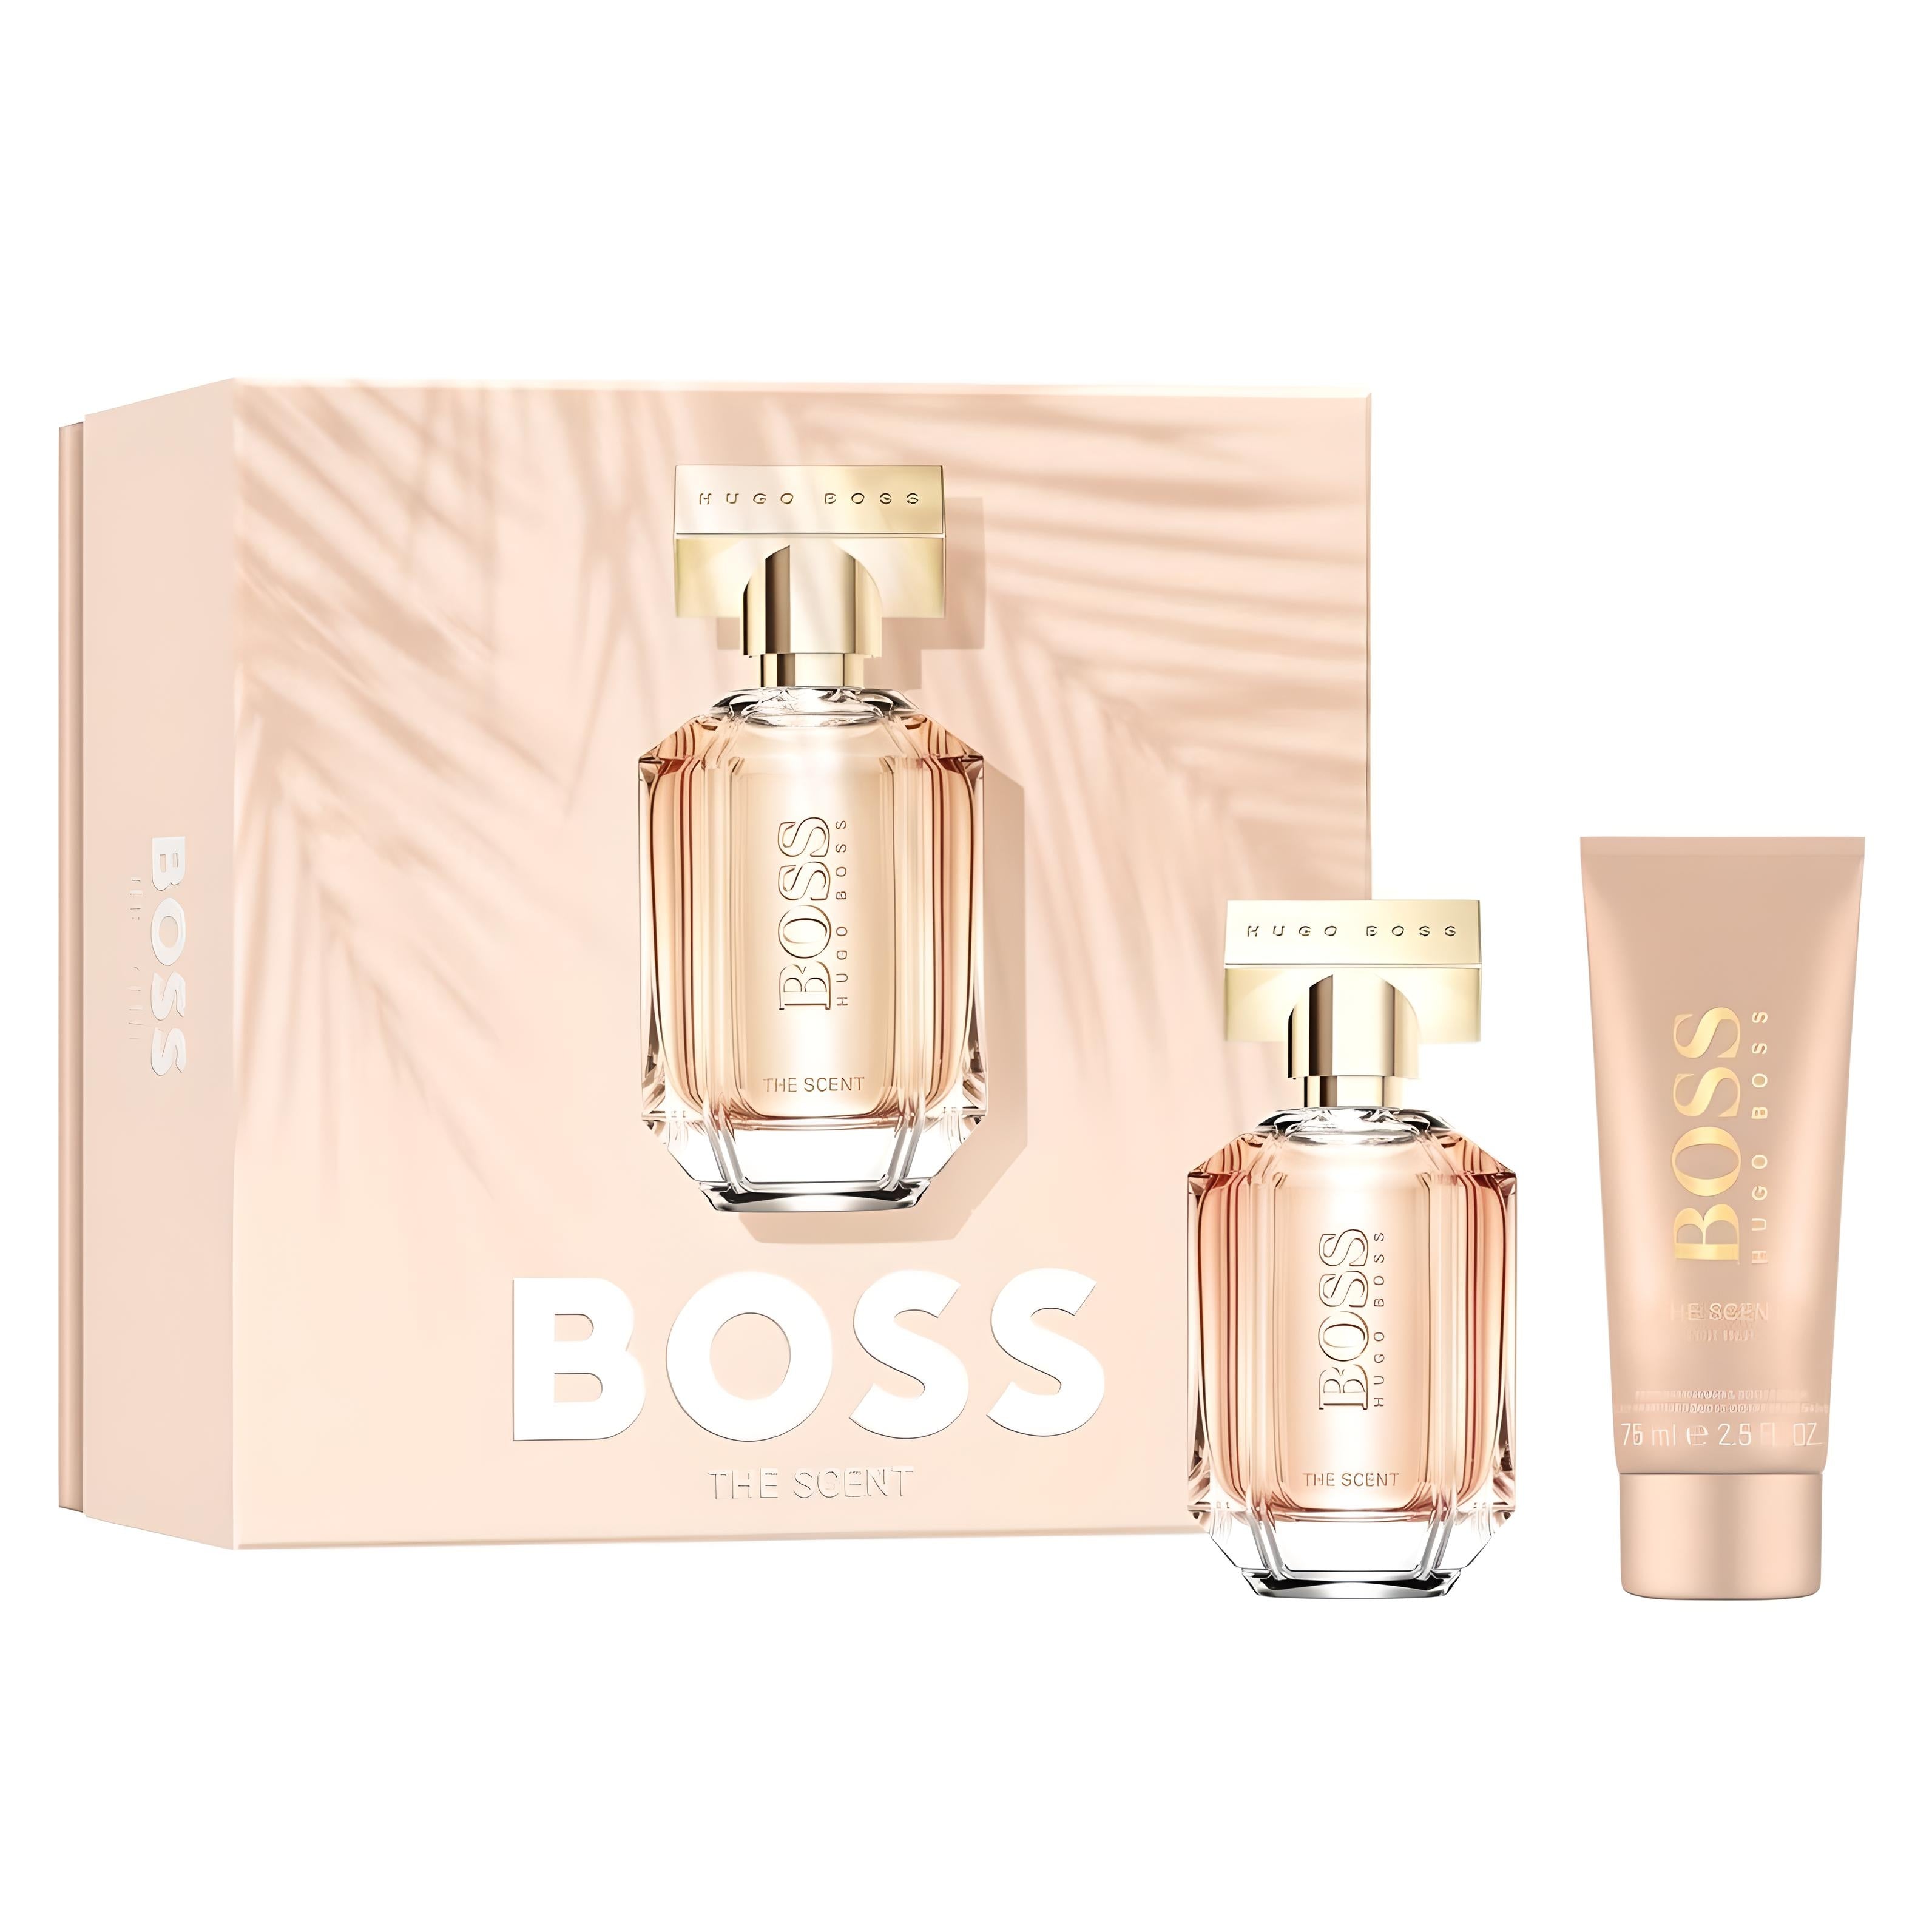 HUGO BOSS THE SCENT FOR HER LOTE Geschenkset Parfum-Set HUGO BOSS   